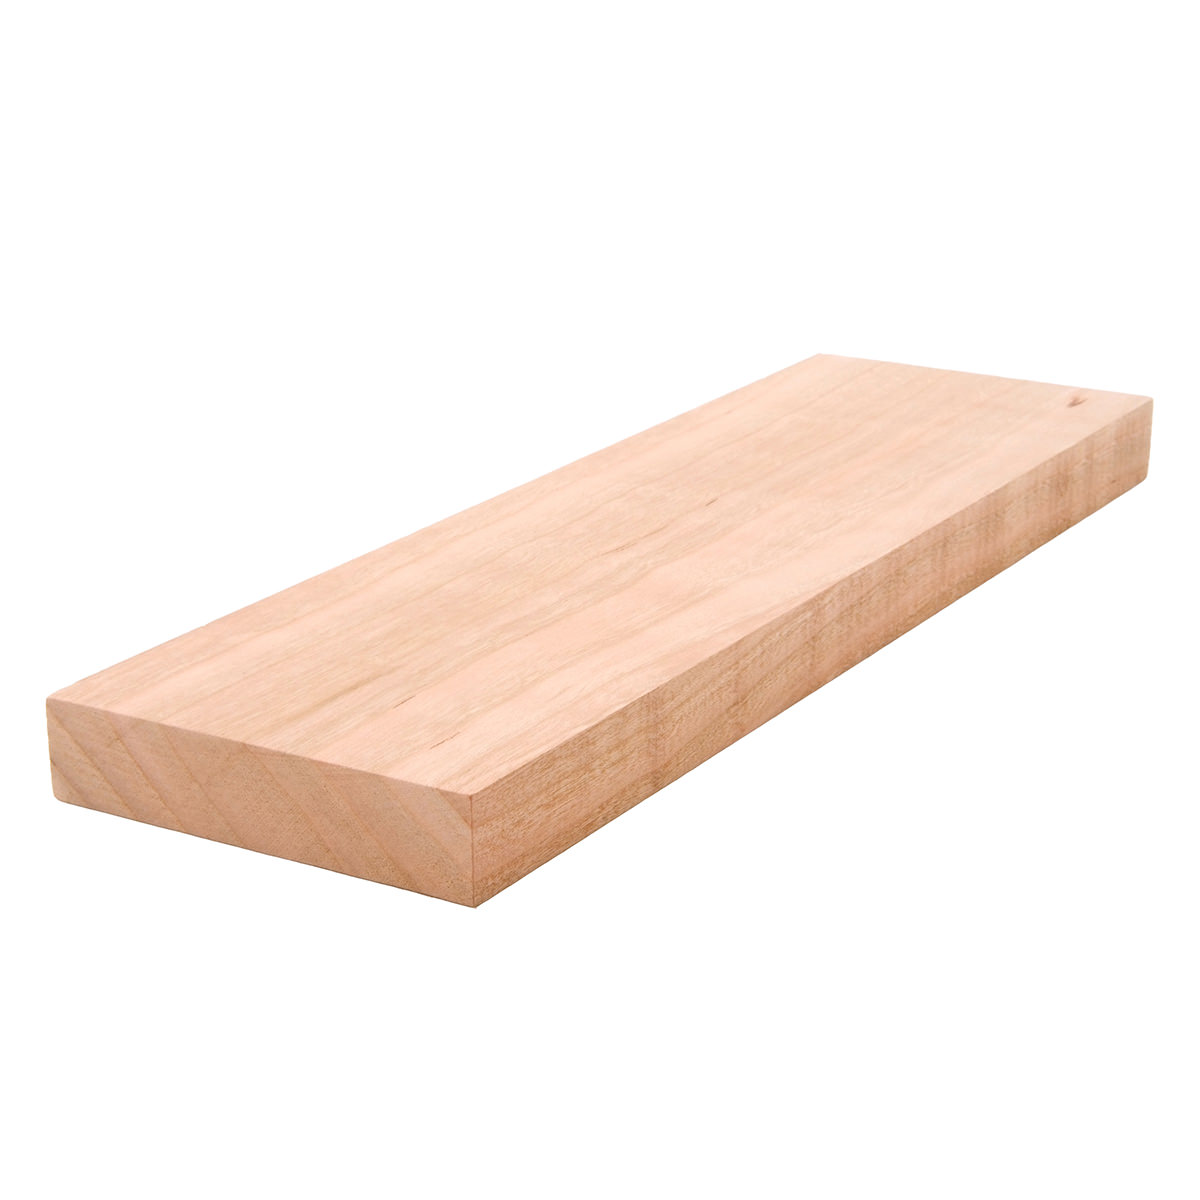 1x4 (3/4" x 31/2") Cherry S4S Lumber, Boards, & Flat